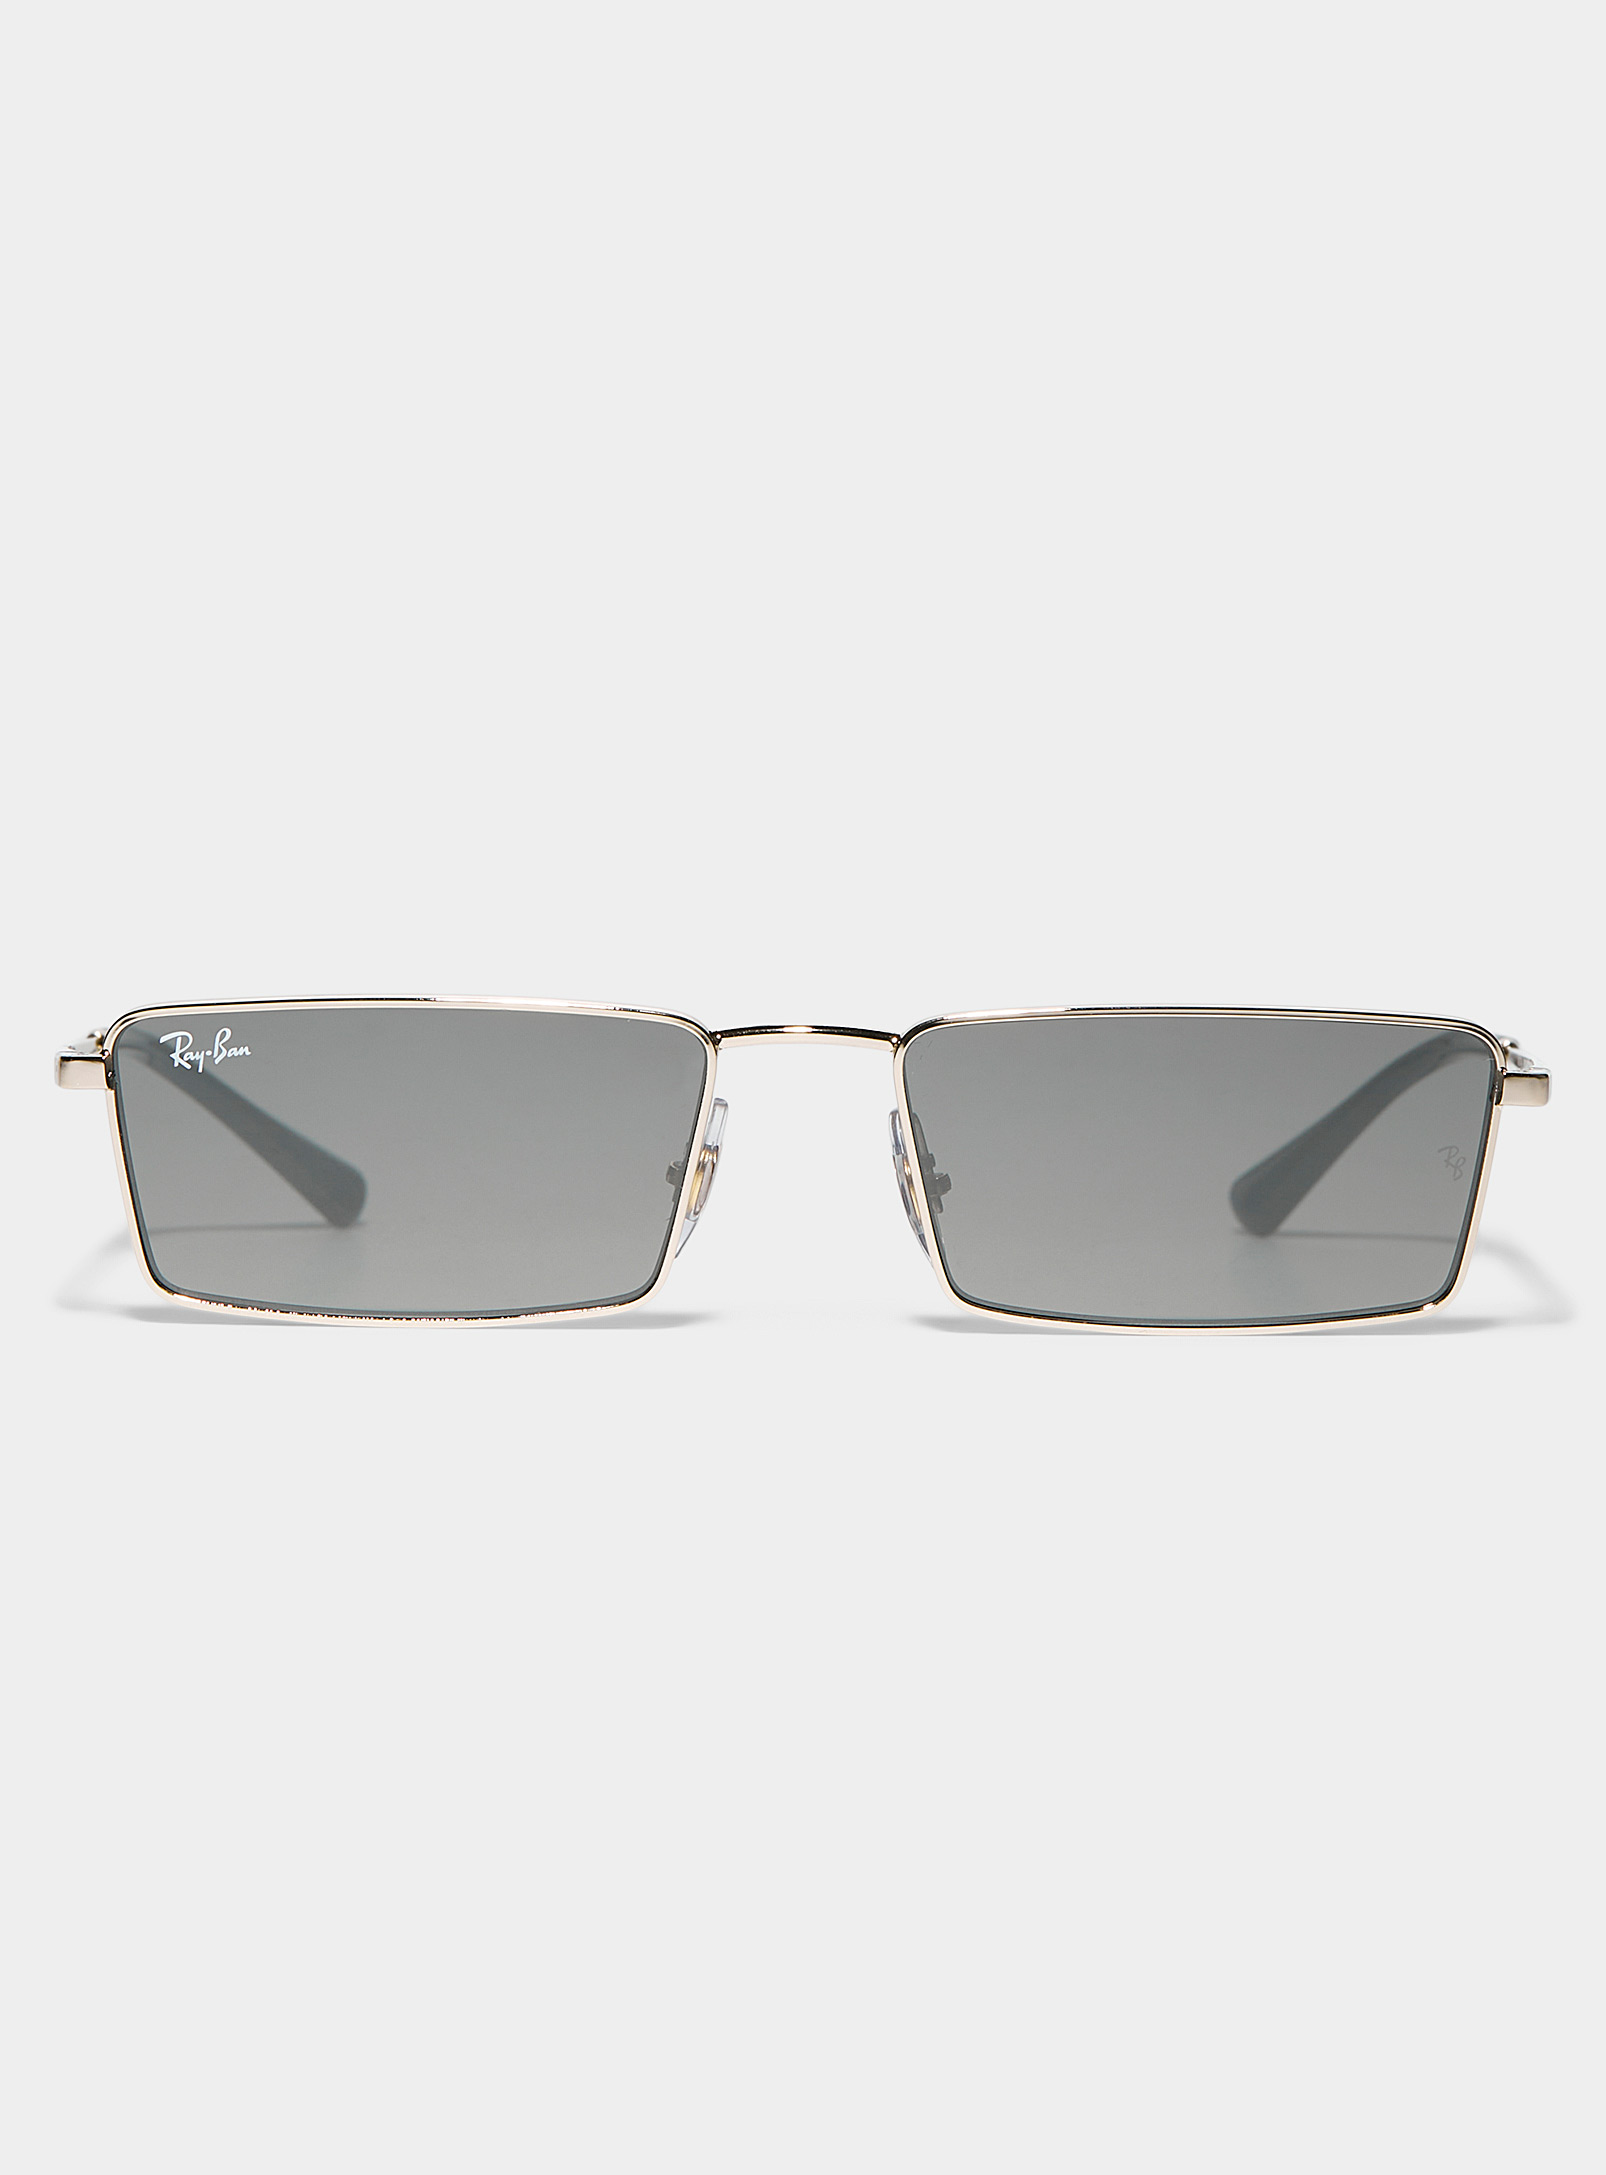 Ray-Ban - Men's Retro rectangular sunglasses